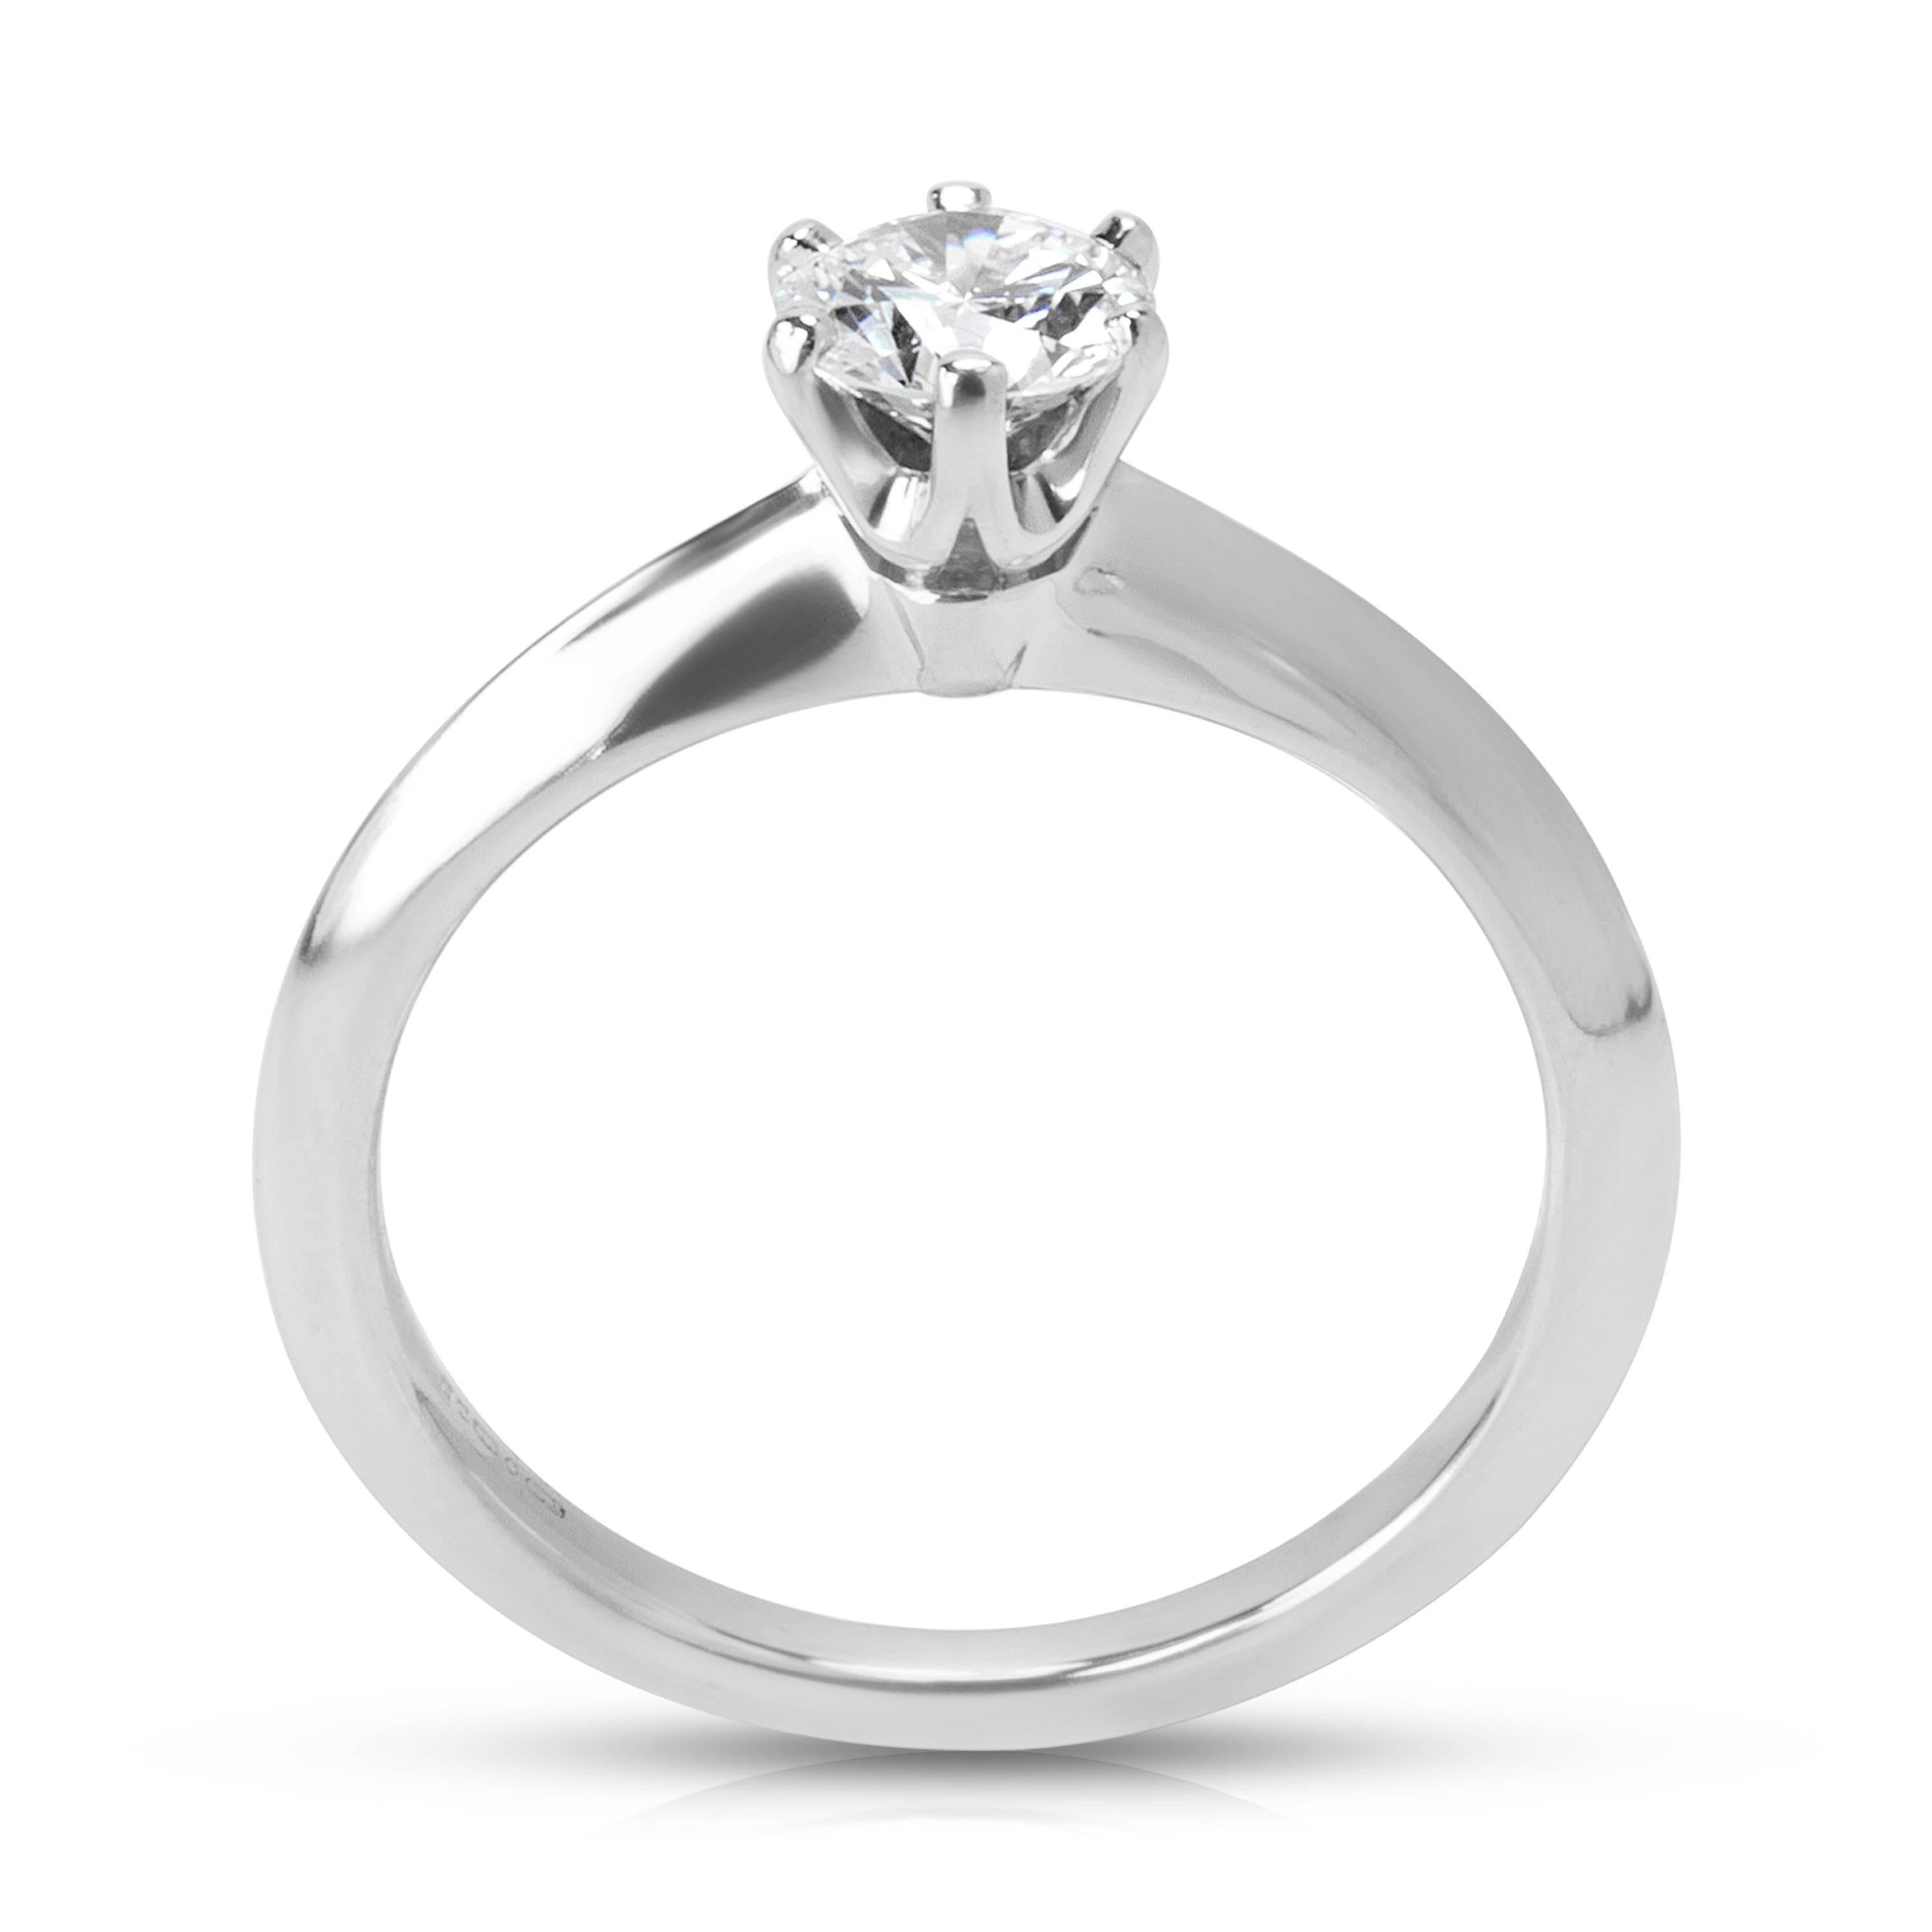 Round Cut Tiffany & Co. Diamond Solitaire Engagement Ring in Platinum 0.42 Carat